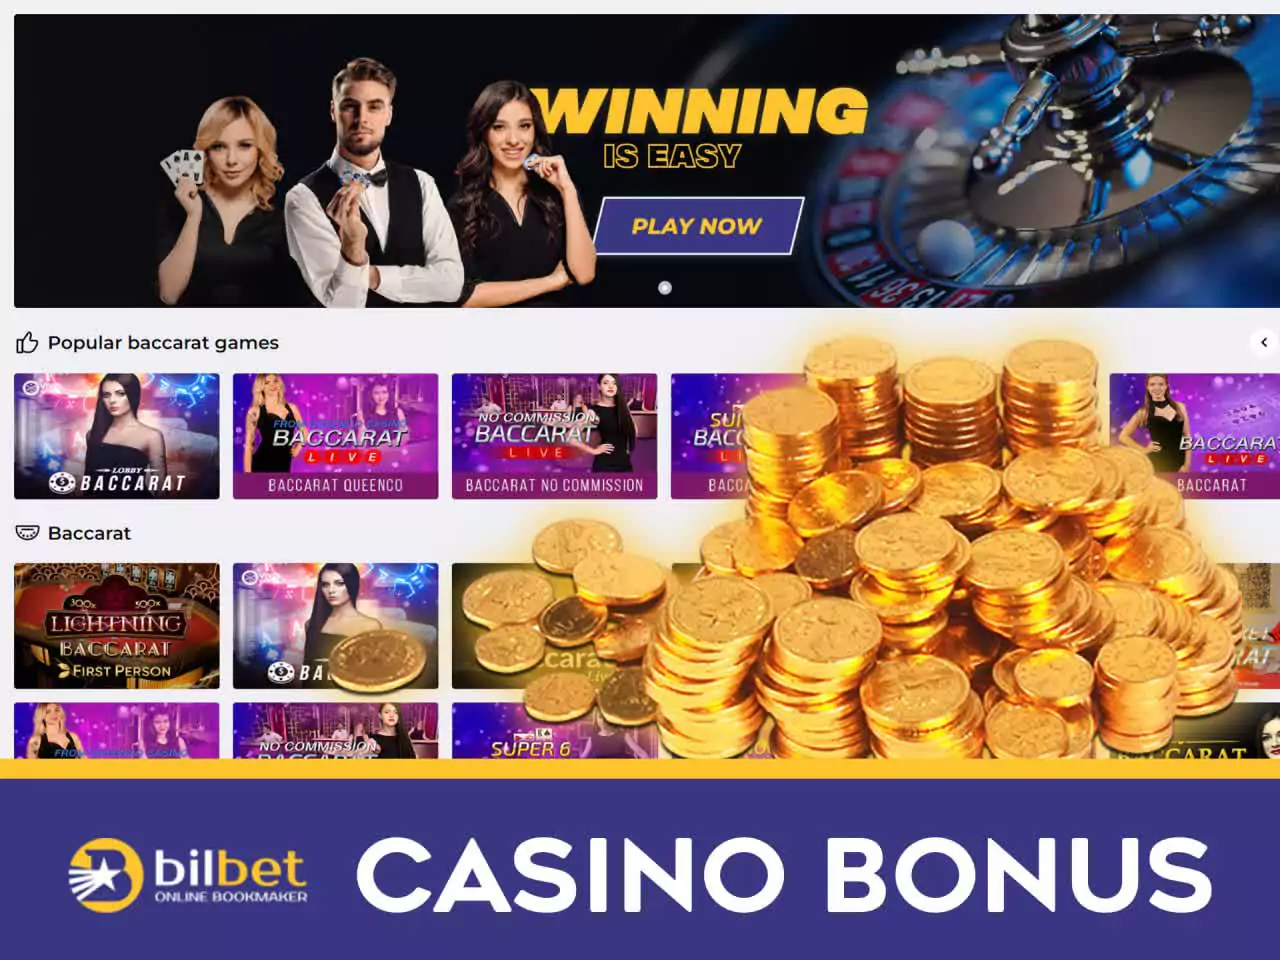 You can also get a bonus for casino games.